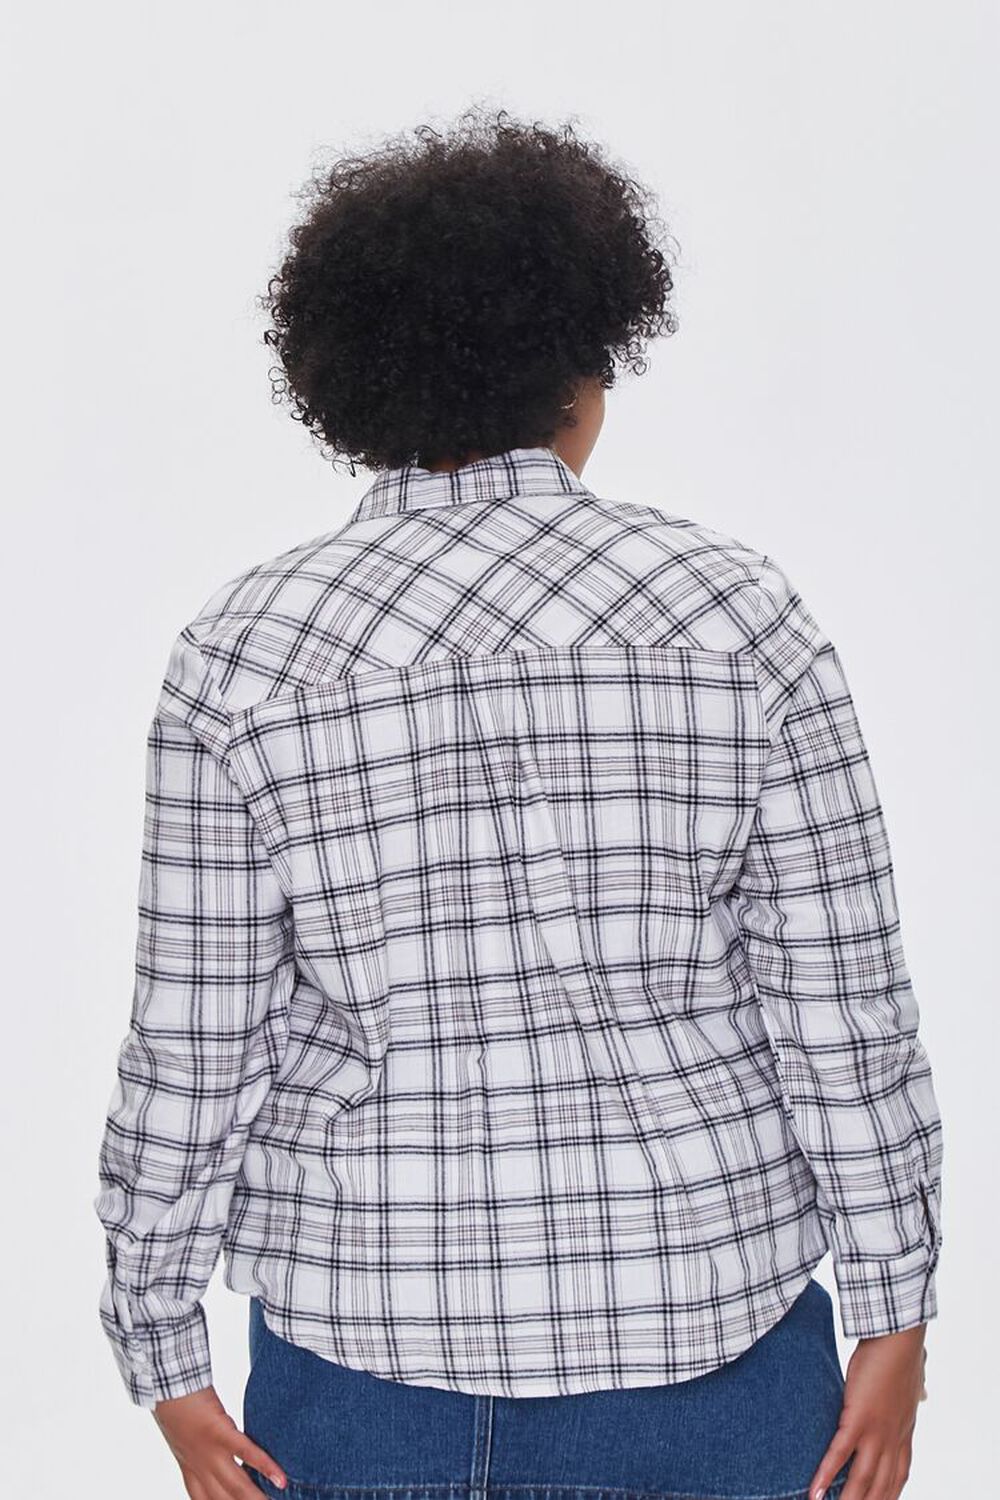 WHITE/MULTI Plus Size Dual-Pocket Flannel Plaid Shirt, image 3